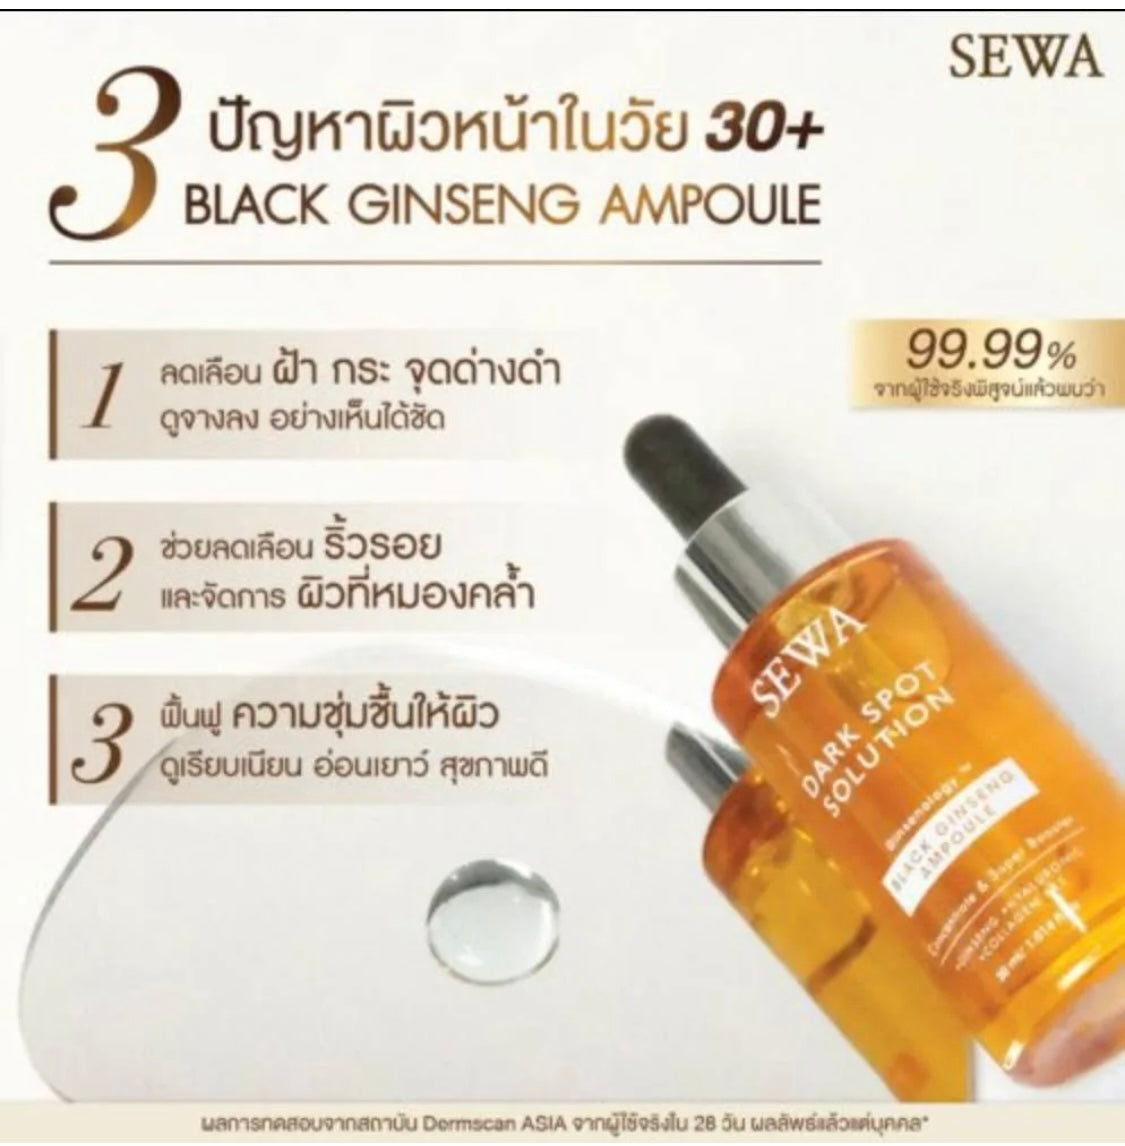 SEWA โสมทองคำ Dark Spot Solution Black Ginseng Ampoule Serum 30 ml + get1 free 3x Overnight Cream